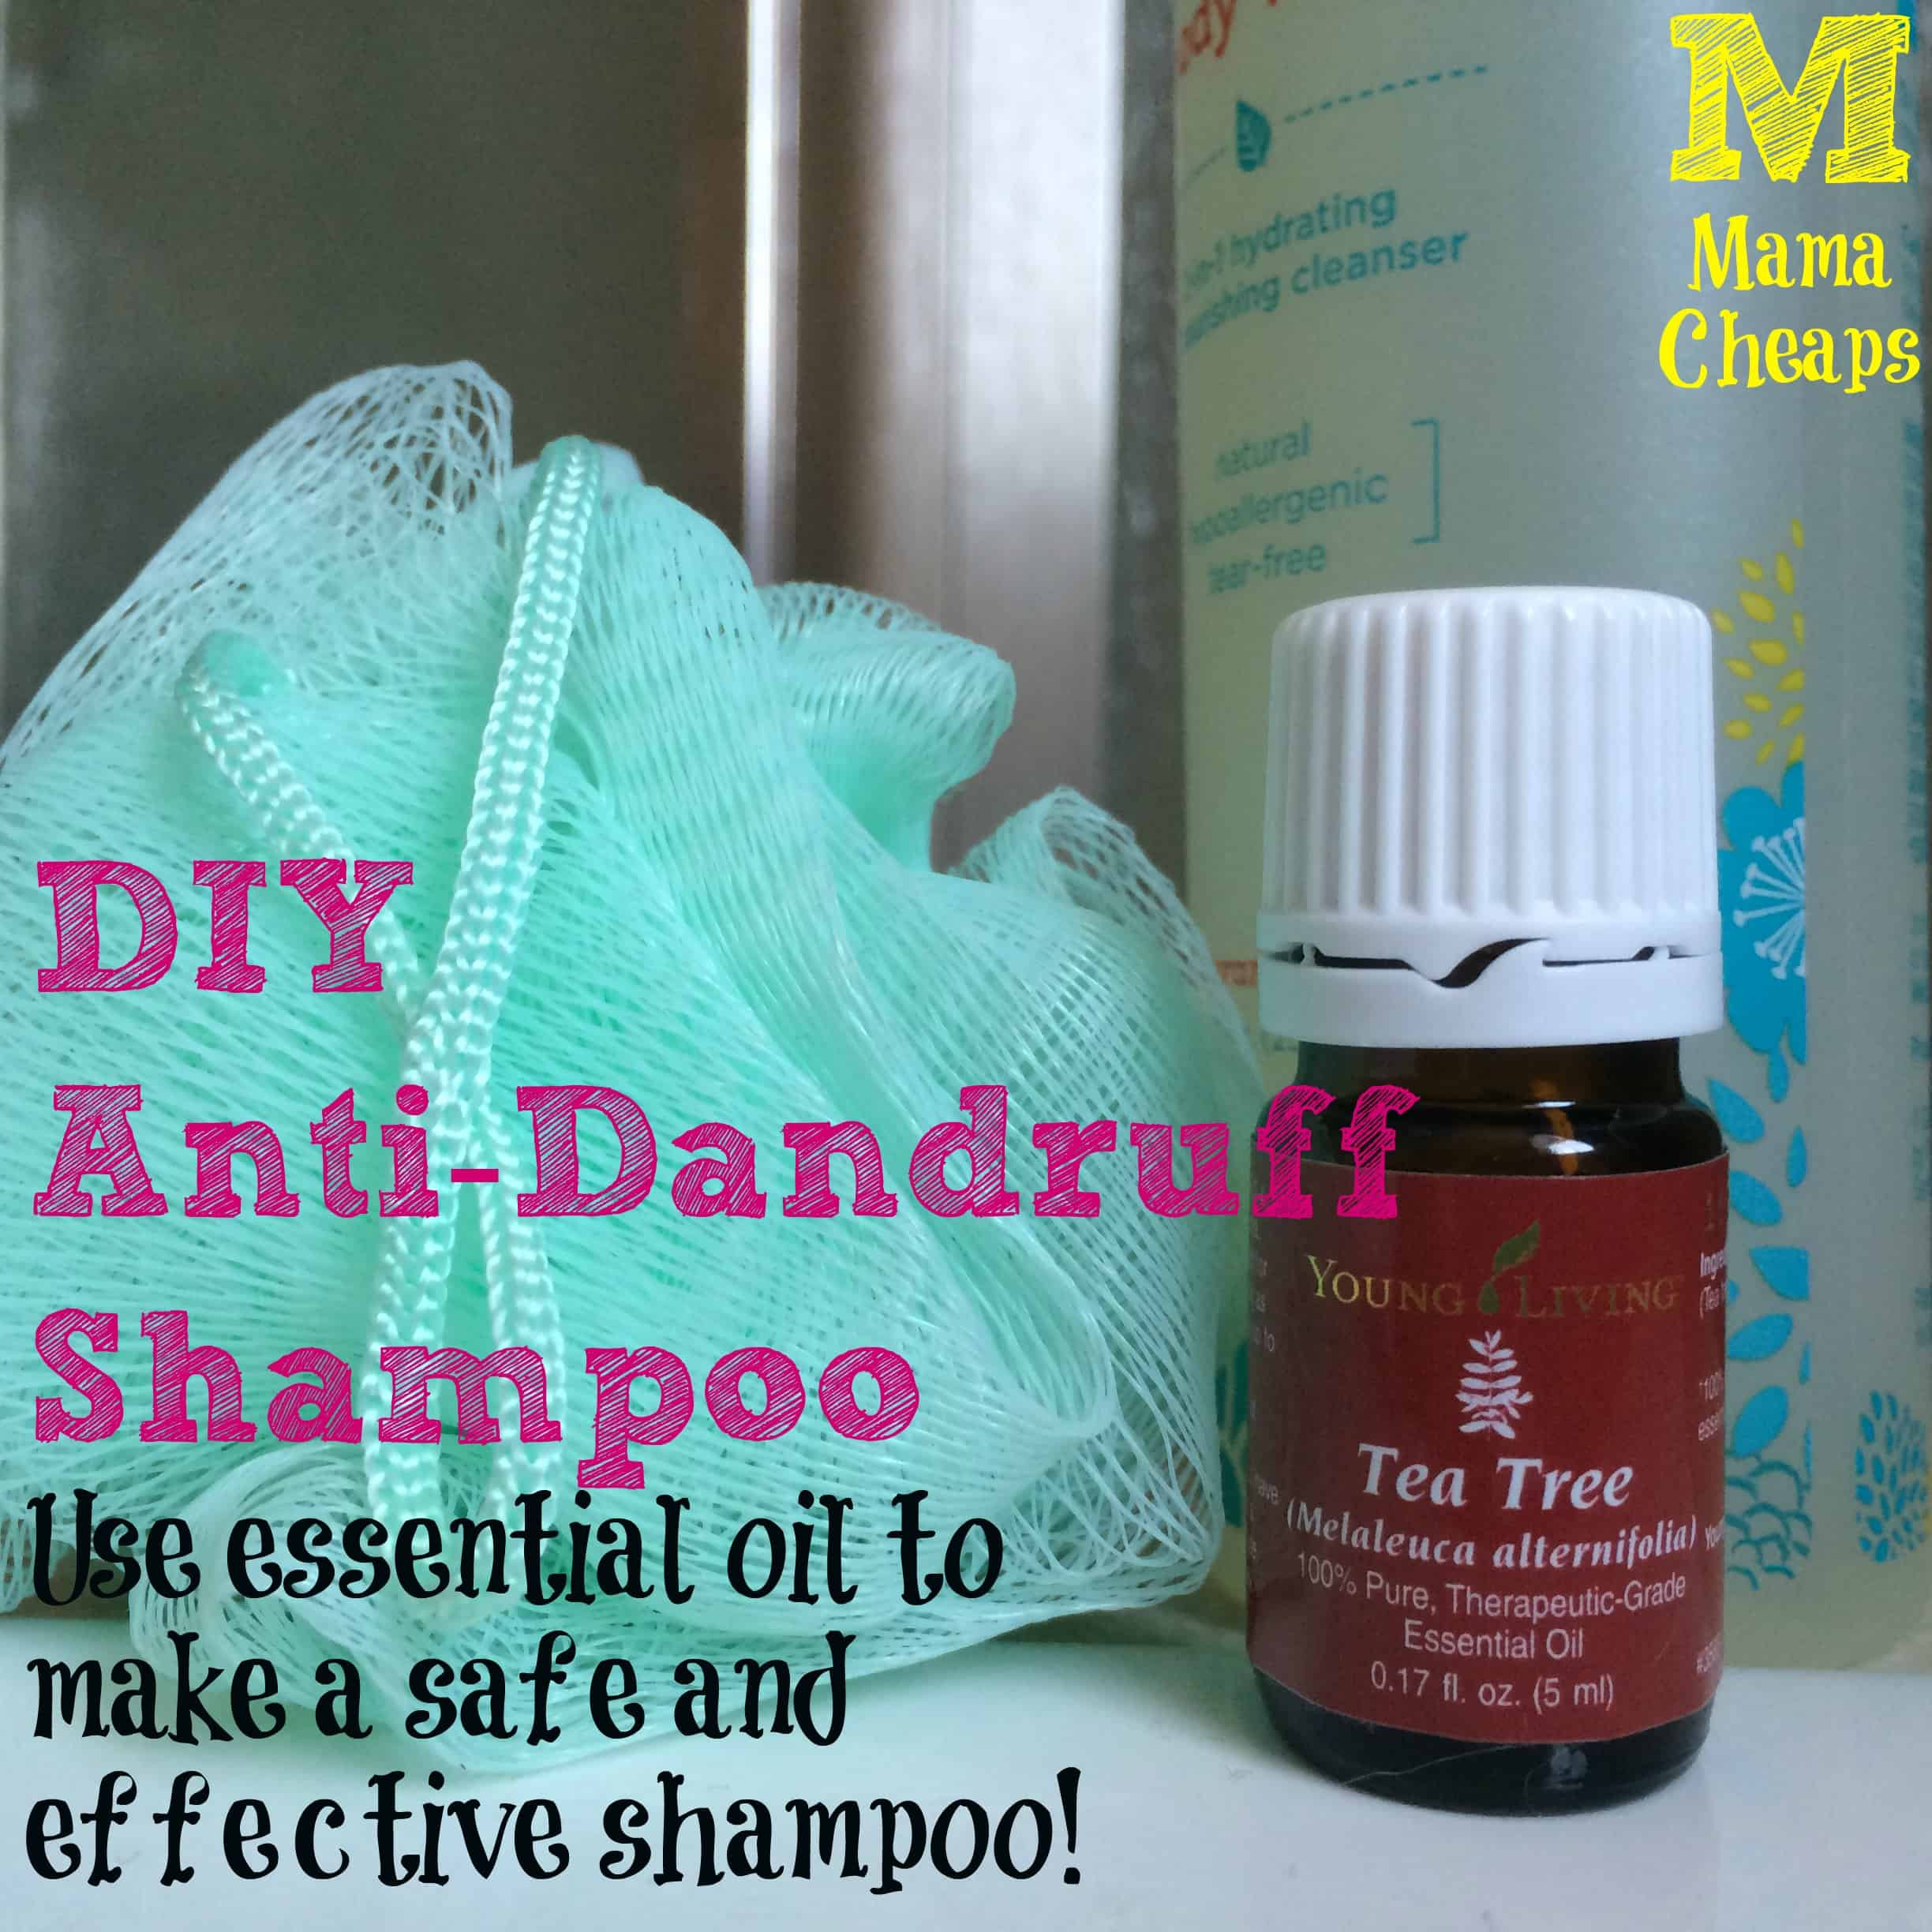 Best ideas about DIY Dandruff Shampoo
. Save or Pin DIY Anti Dandruff Shampoo with Essential Oil Now.